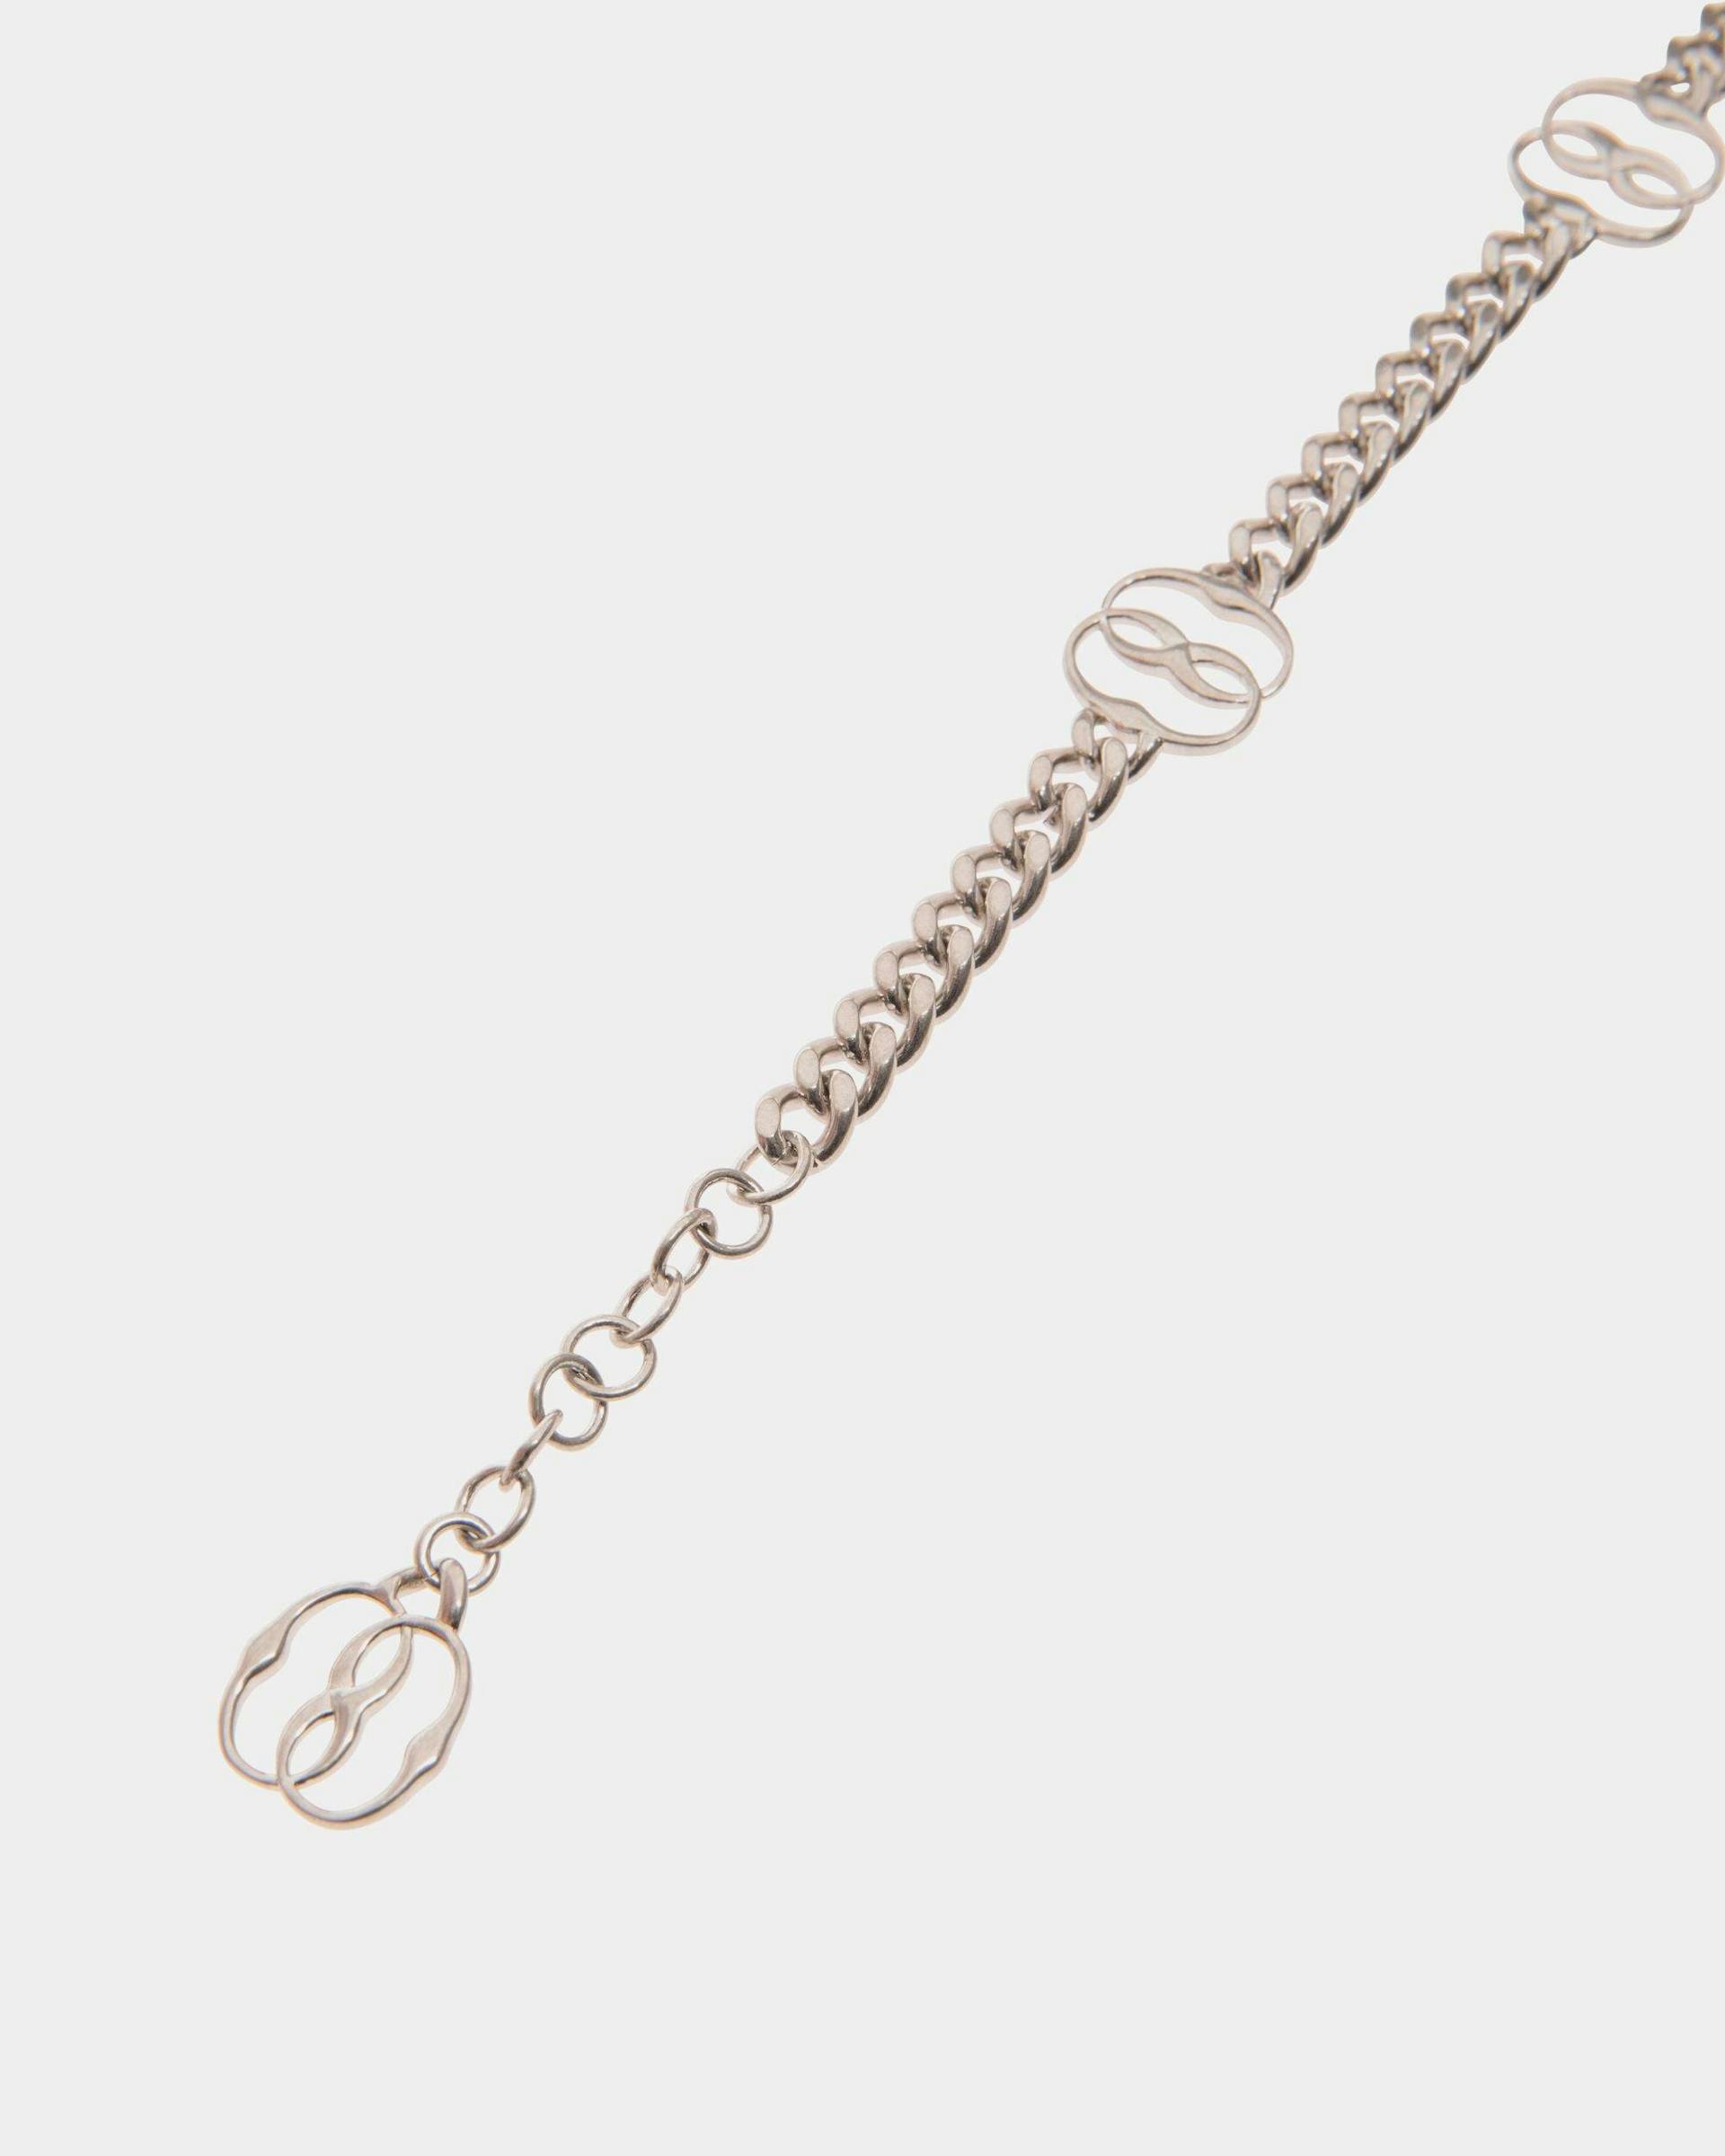 Women's Emblem Bracelet in Silver Eco Brass | Bally | Still Life Detail